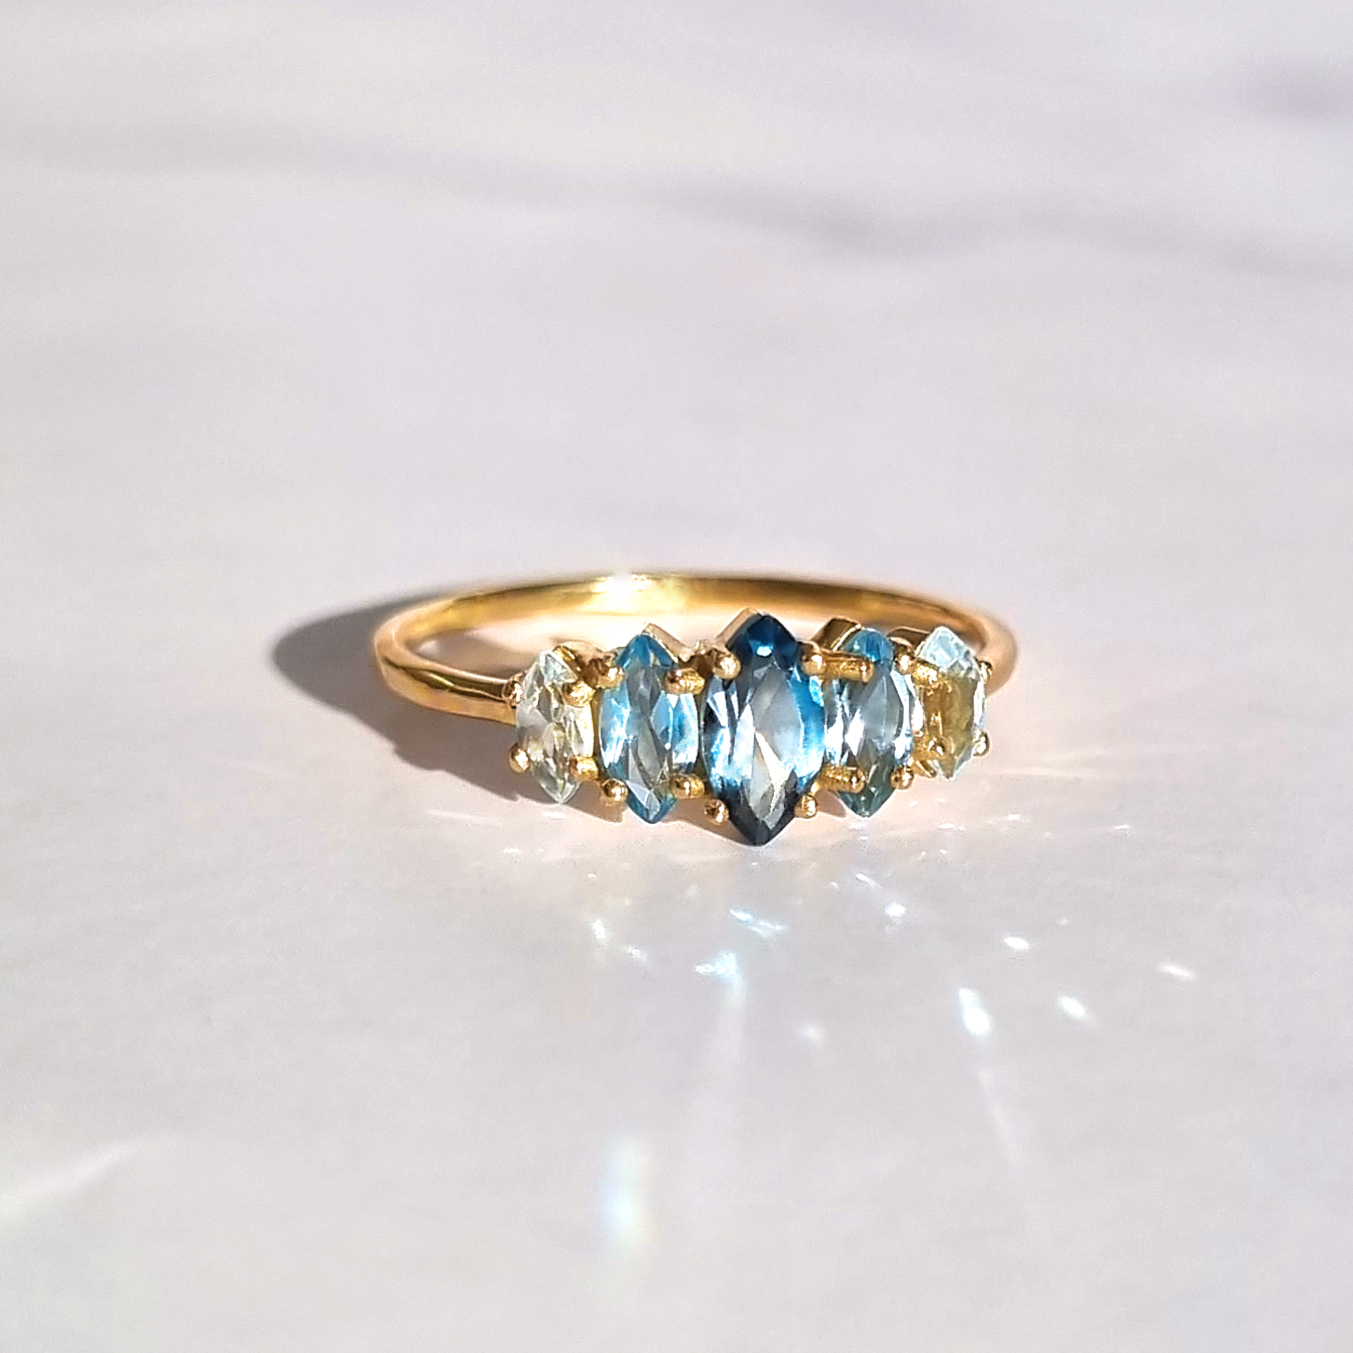 Ombre Blue Topaz Ring in 18k Gold Vermeil